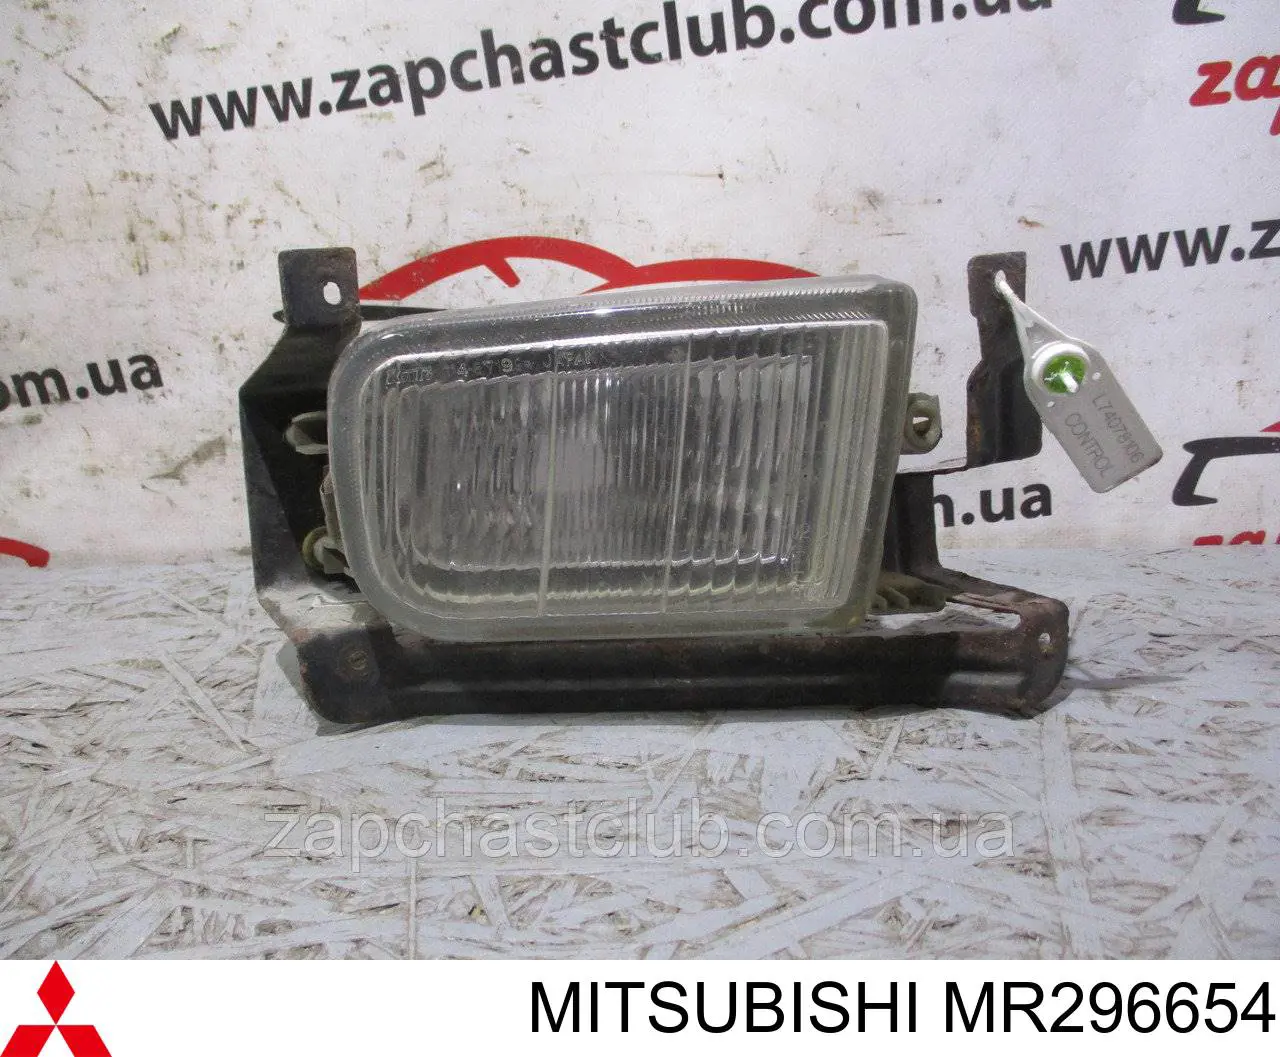 MR296654 Mitsubishi faro antiniebla derecho